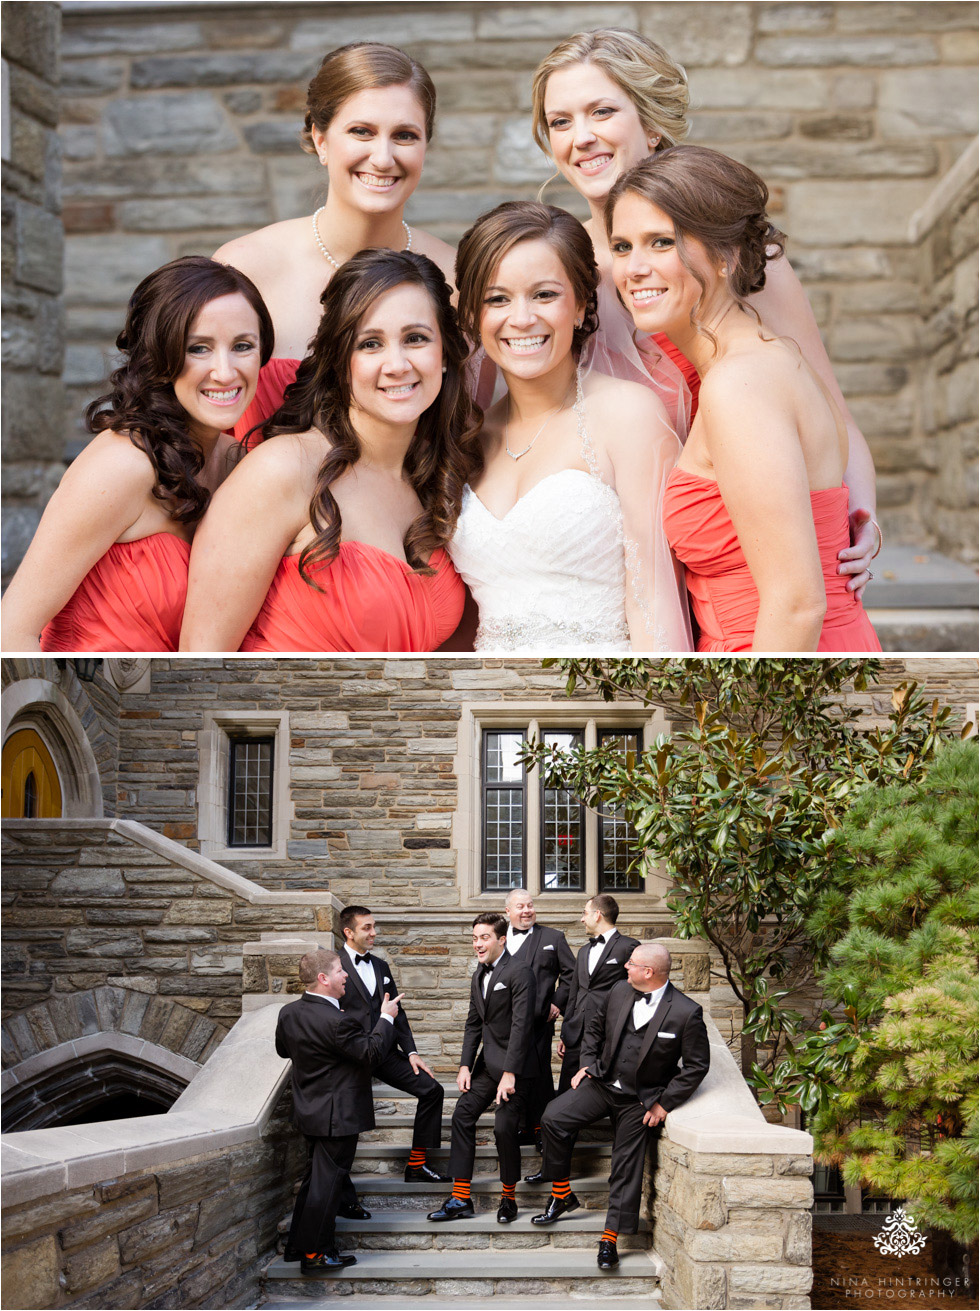 Bridal party at Saint Josephs University campus in Philadelphia, Pennsylvania - Blog of Nina Hintringer Photography - Wedding Photography, Wedding Reportage and Destination Weddings